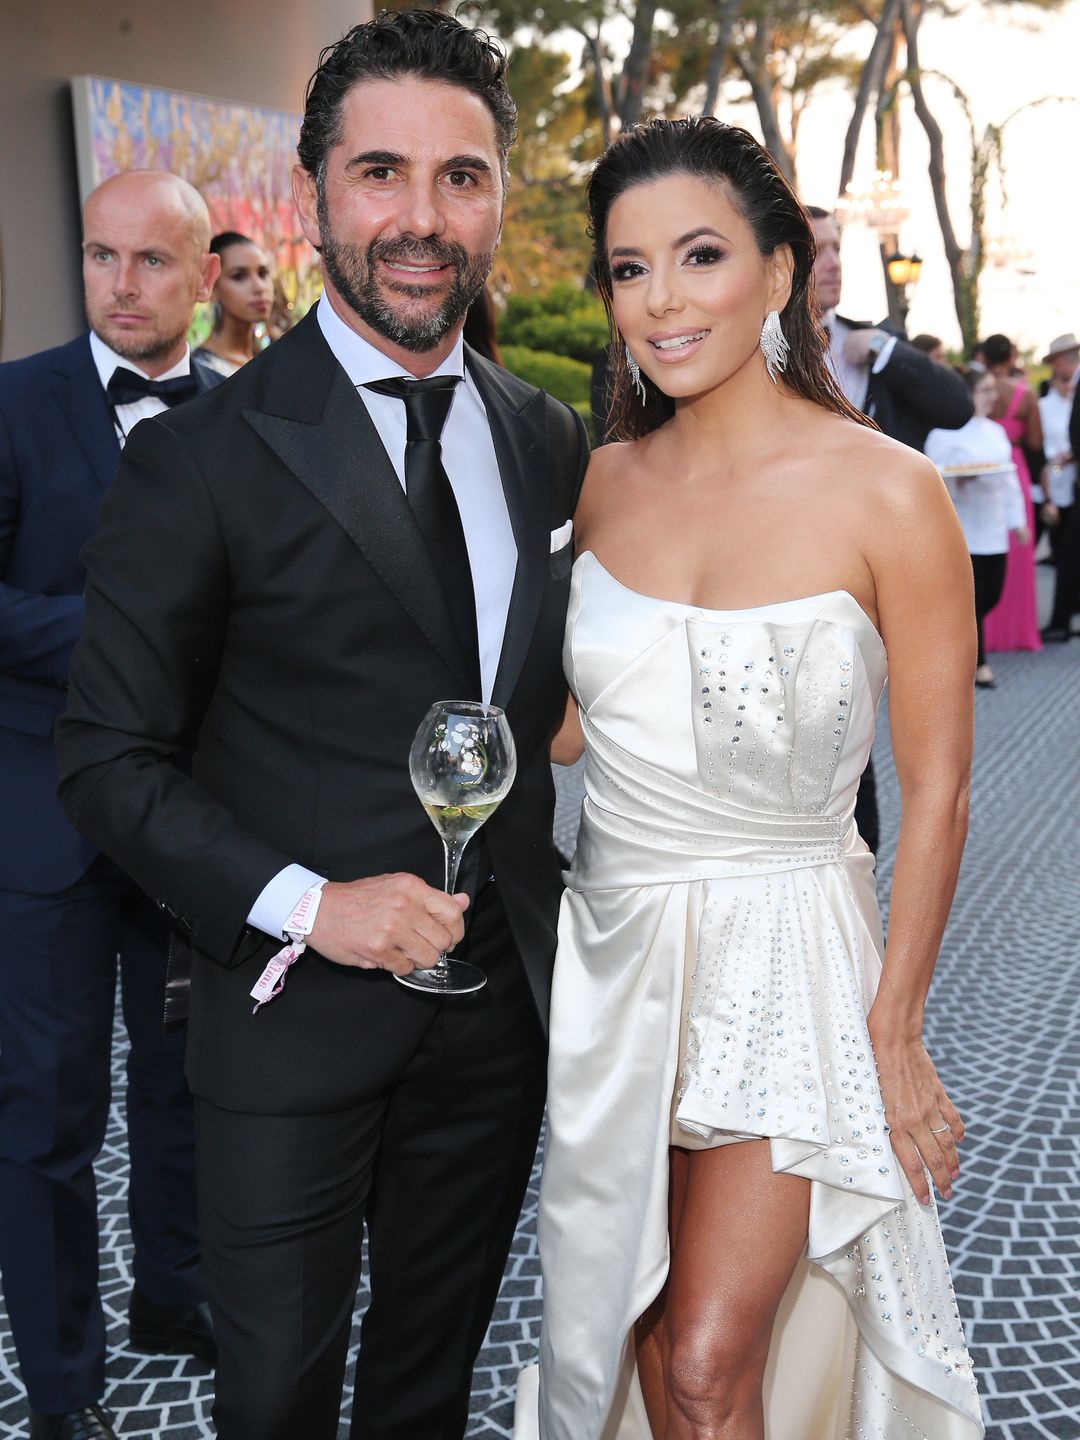 Jose Baston and Eva Longoria attends the amfAR Cannes Gala 2019 